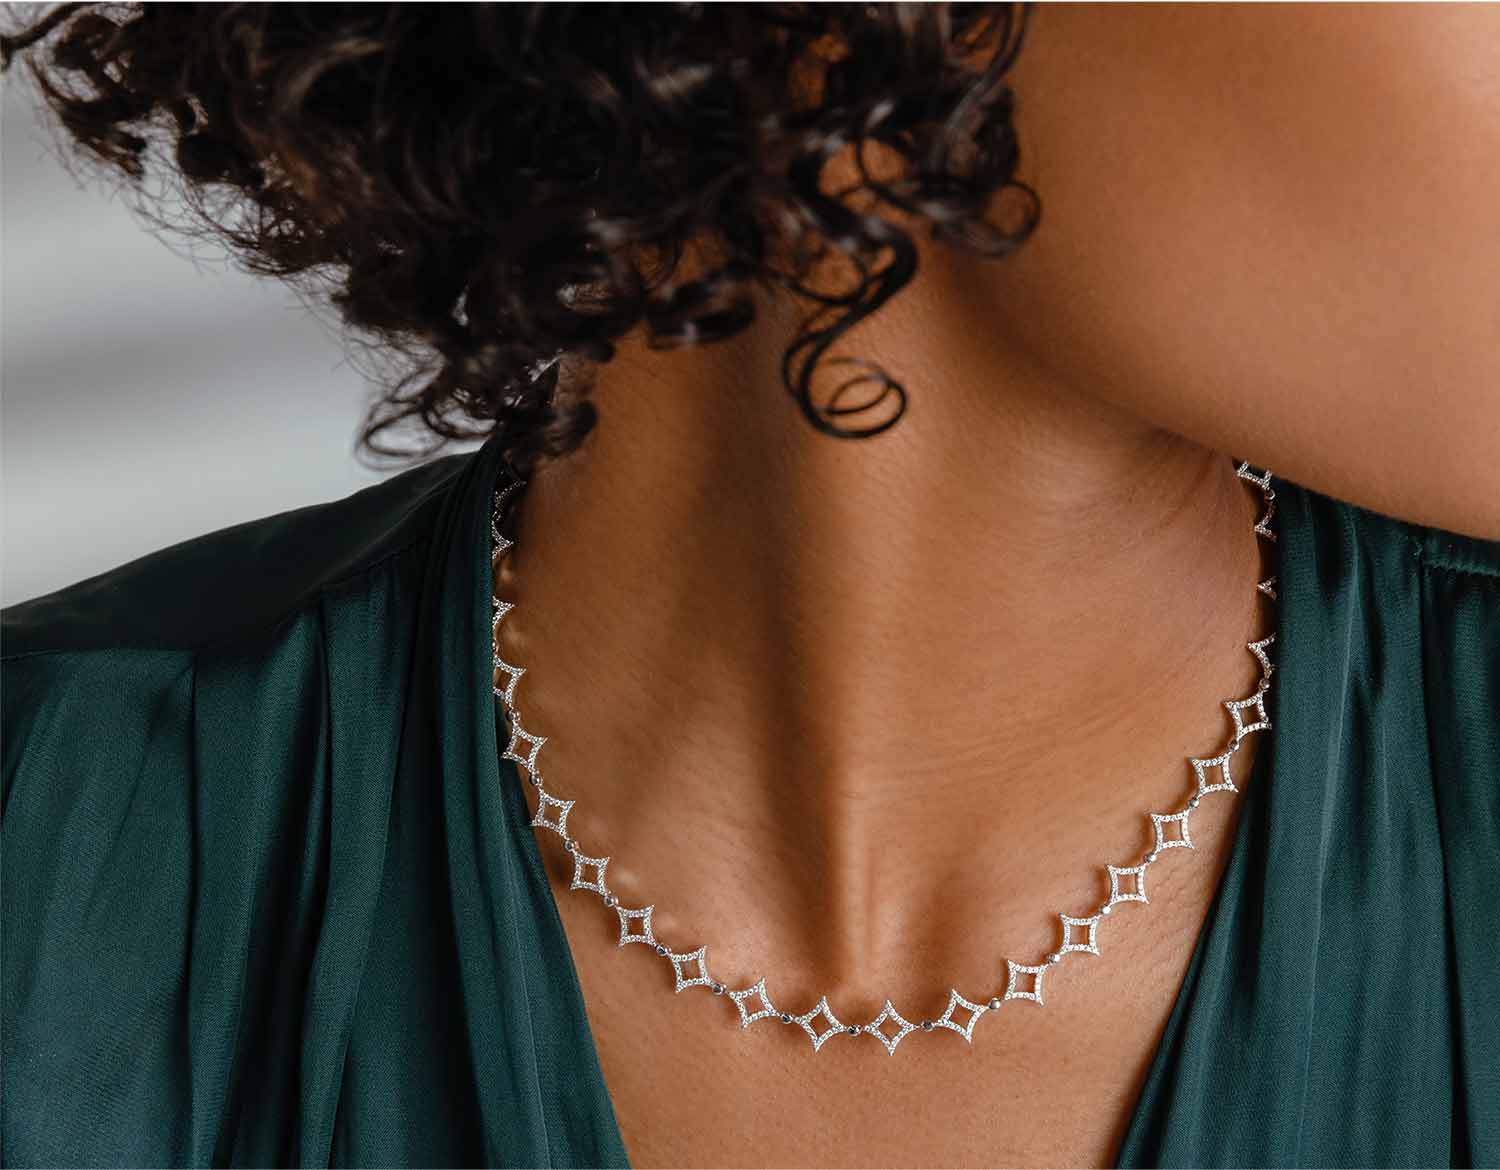 Woman wearing distinctive diamond necklace